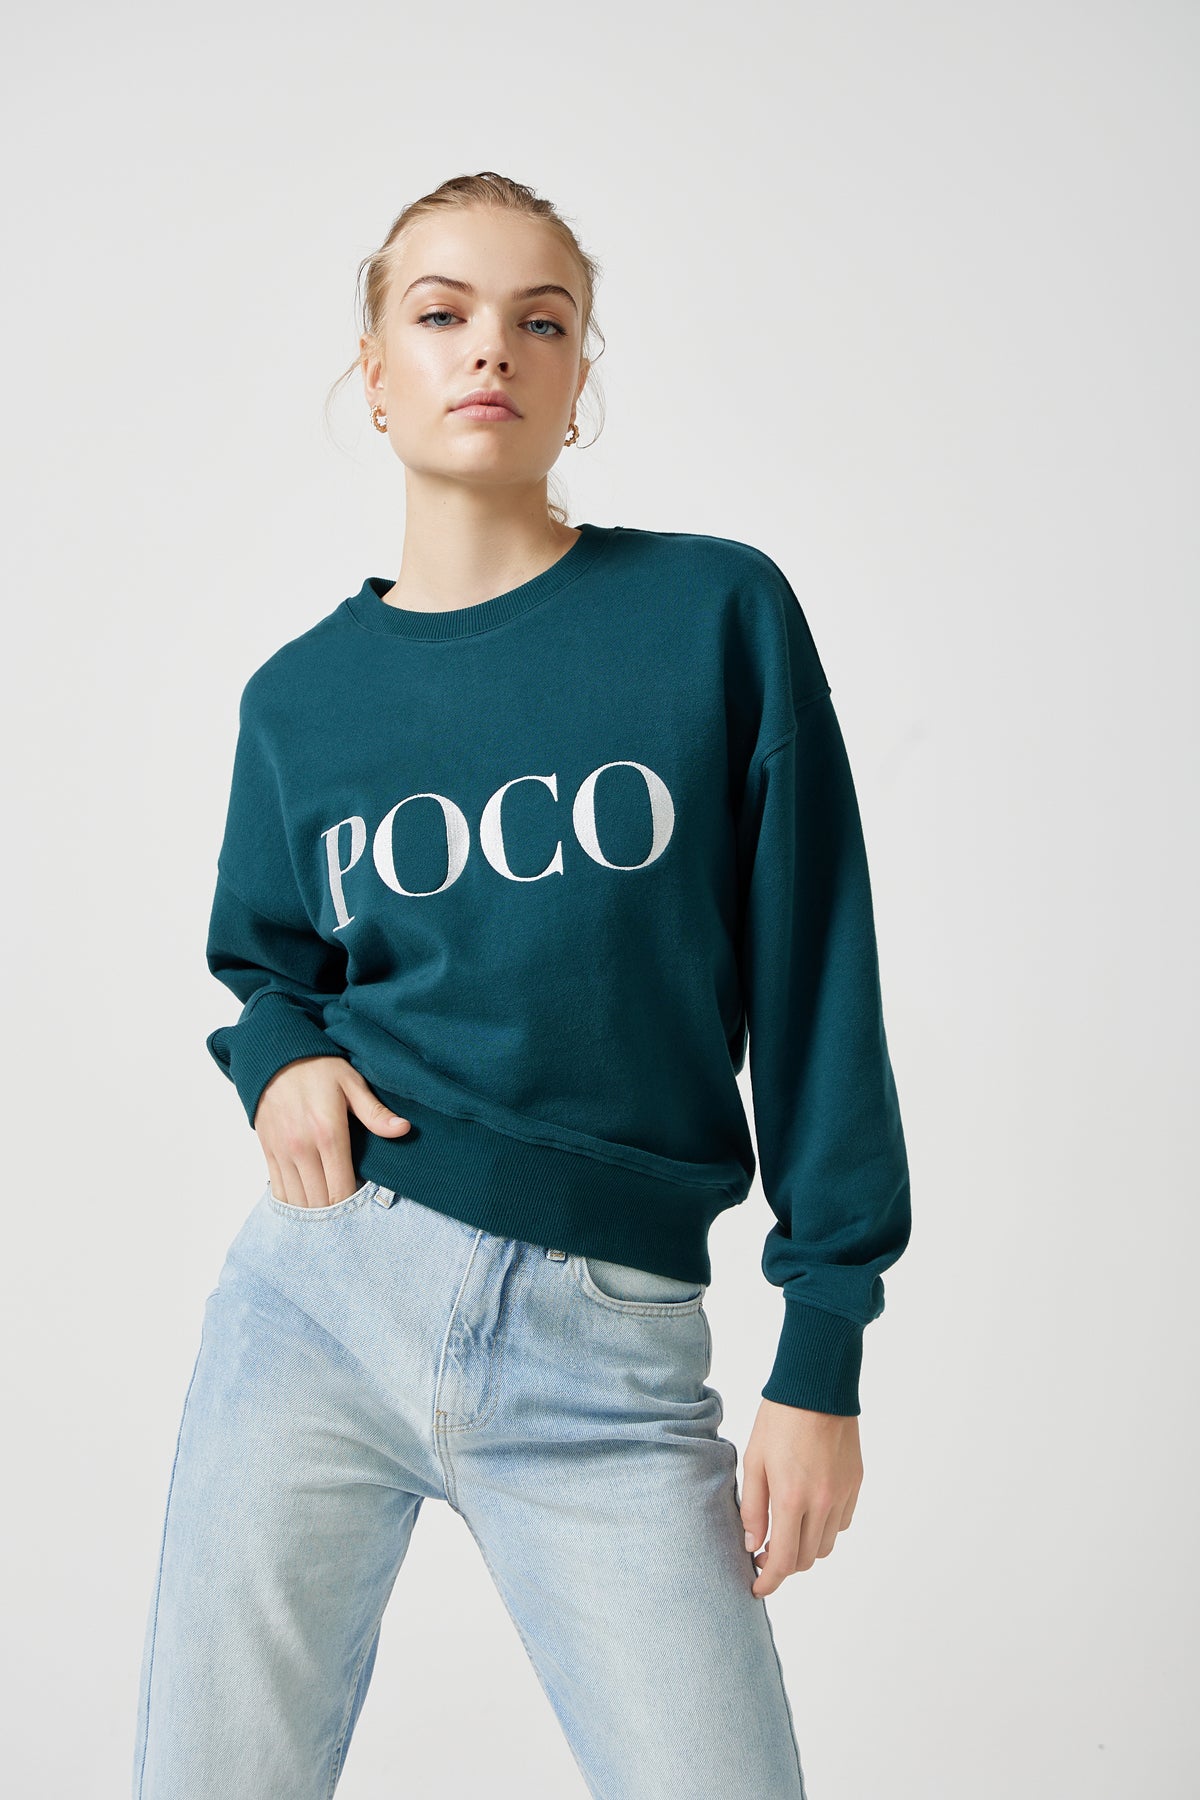 Poco Embroidery Sweatshirt - Green/Off White